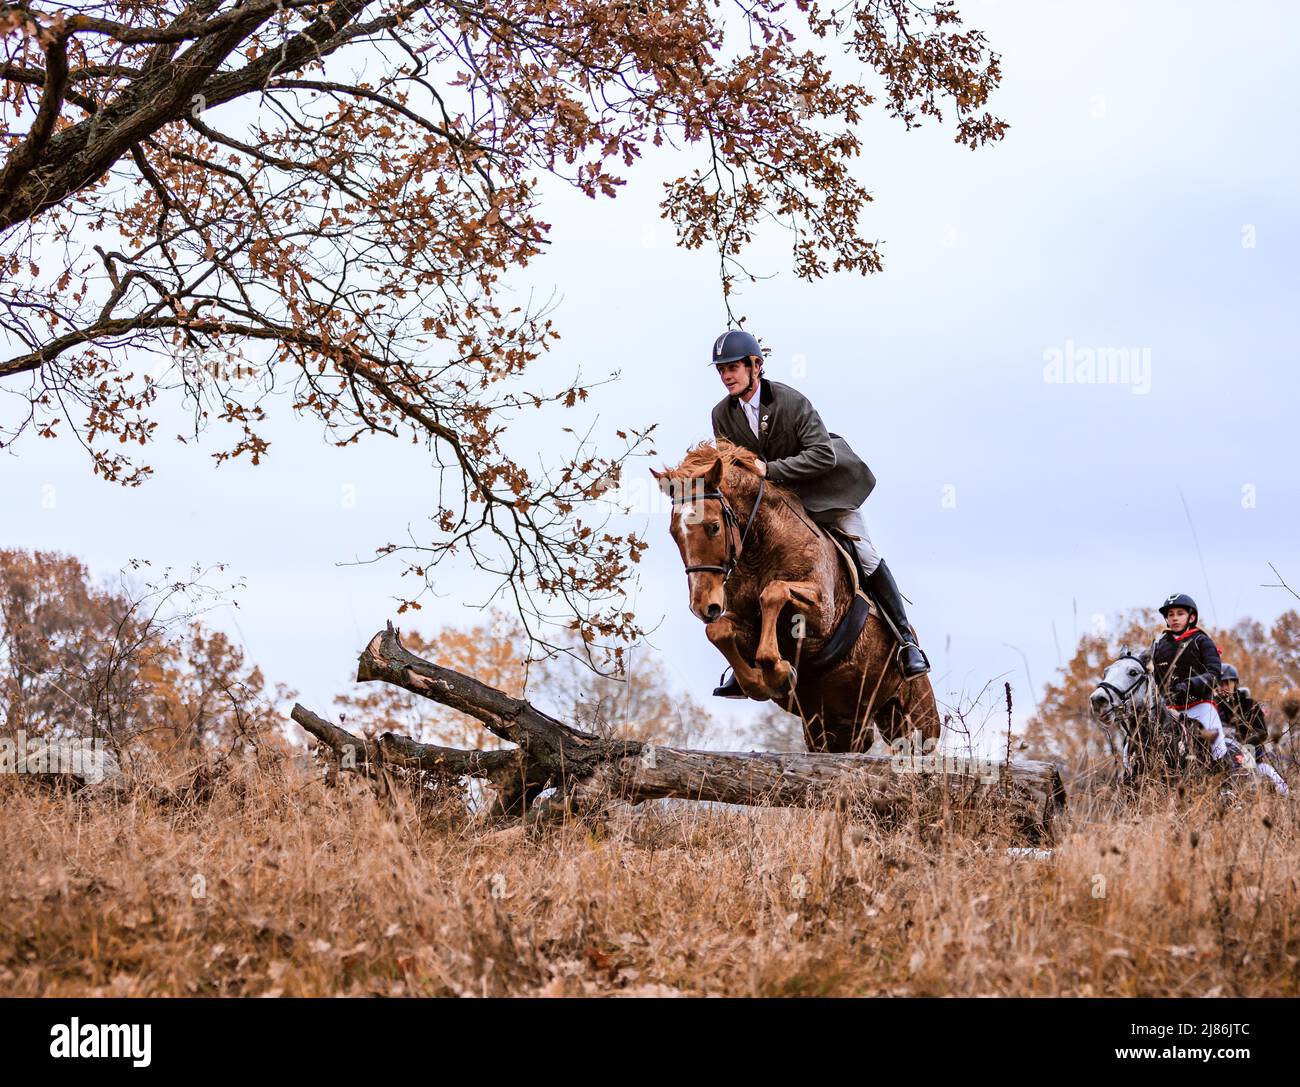 St. Hubertus ride in fall - hunt of fox Czech republic Stock Photo